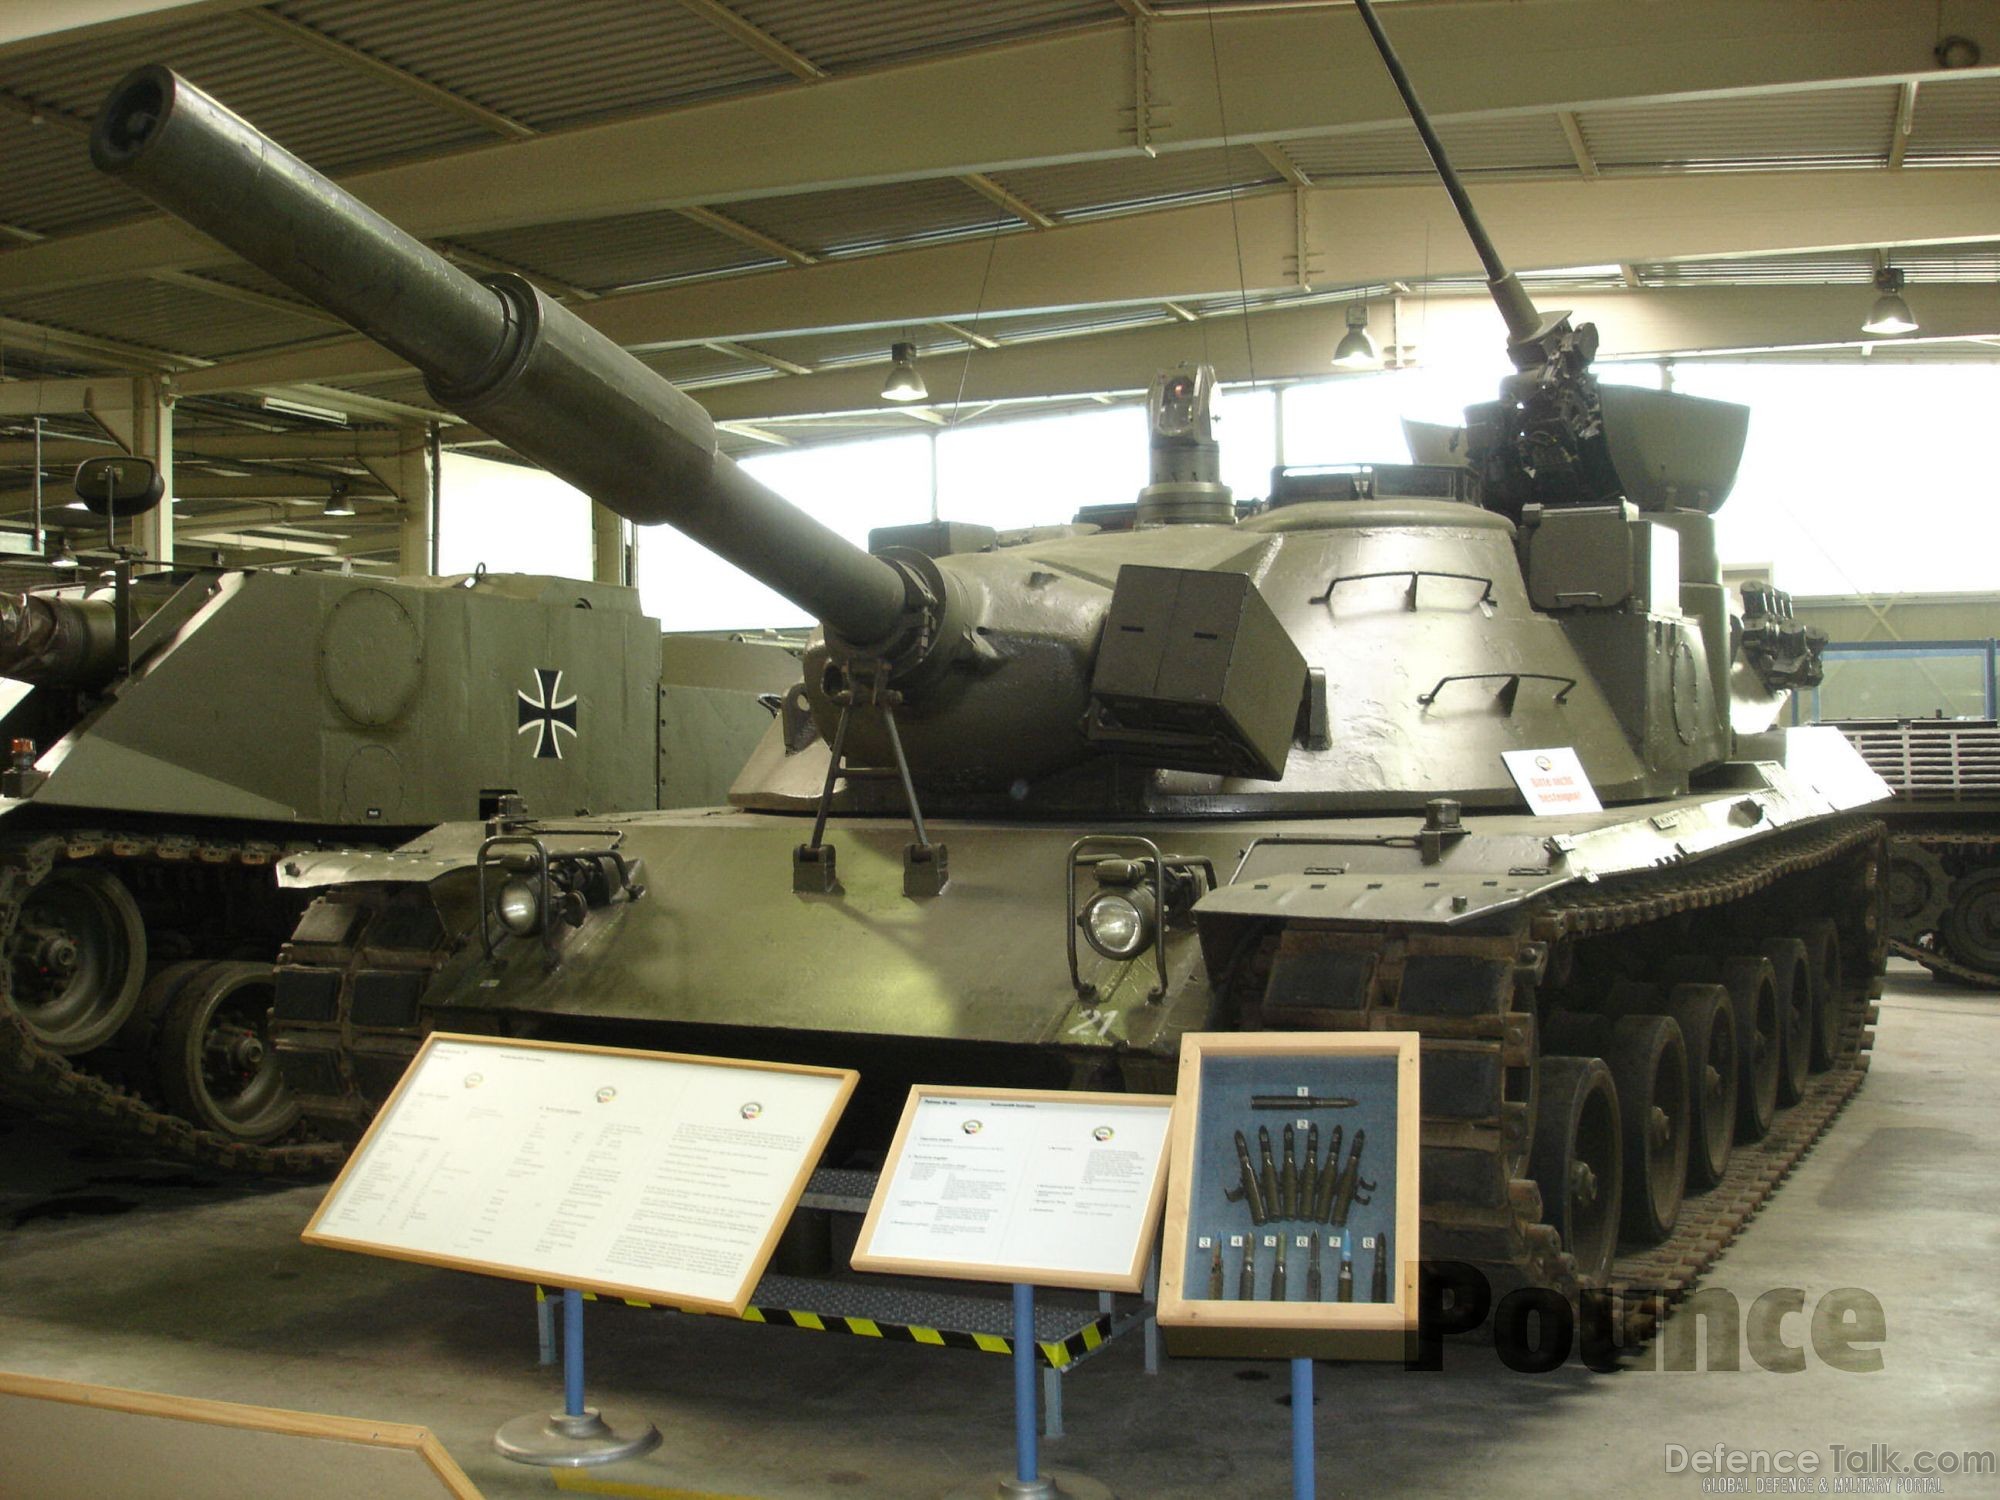 MBT-70/Kampfpanzer 70